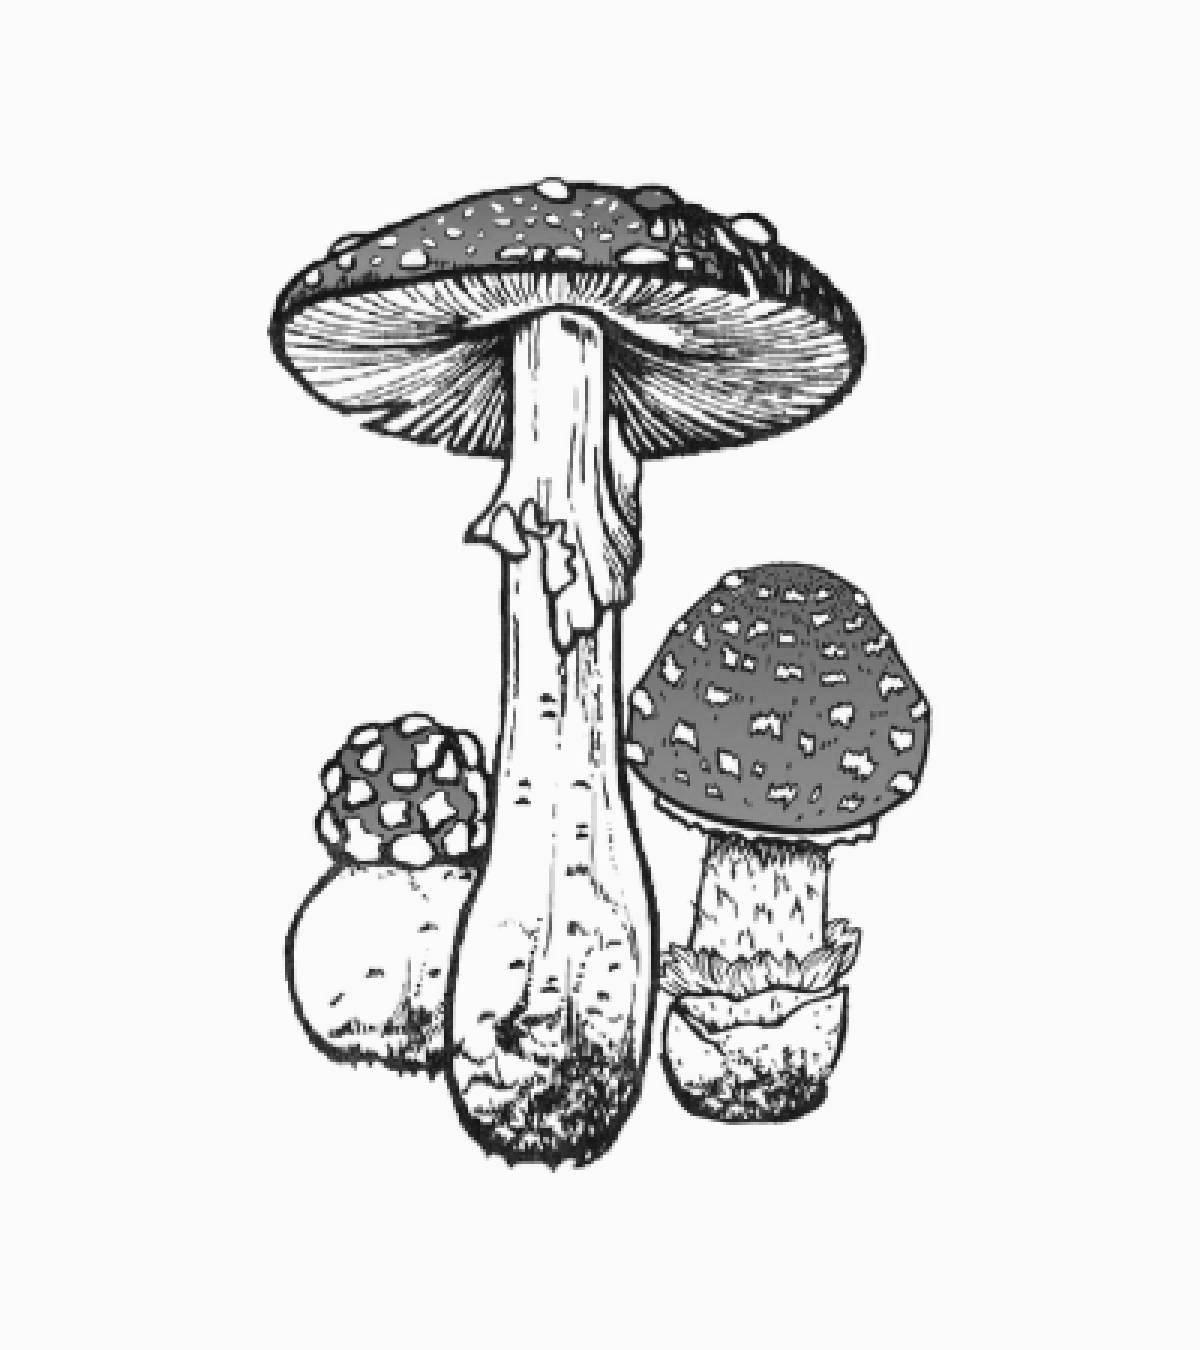 Dreamy toadstool mushrooms